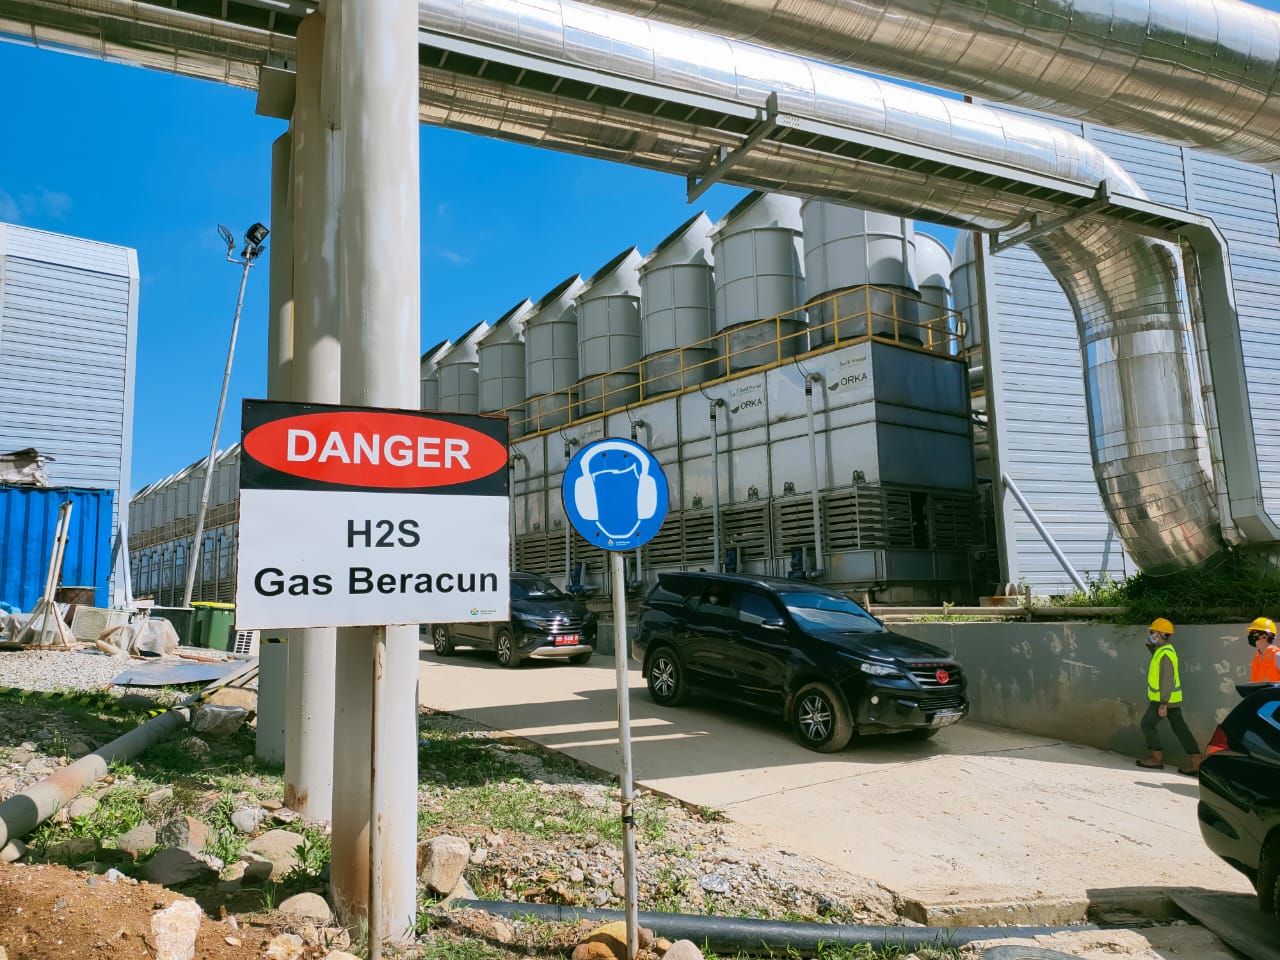 Plang peringatan bahaya gas beracun. Foto: Ayat S Karokaro/ Mongabay Indonesia